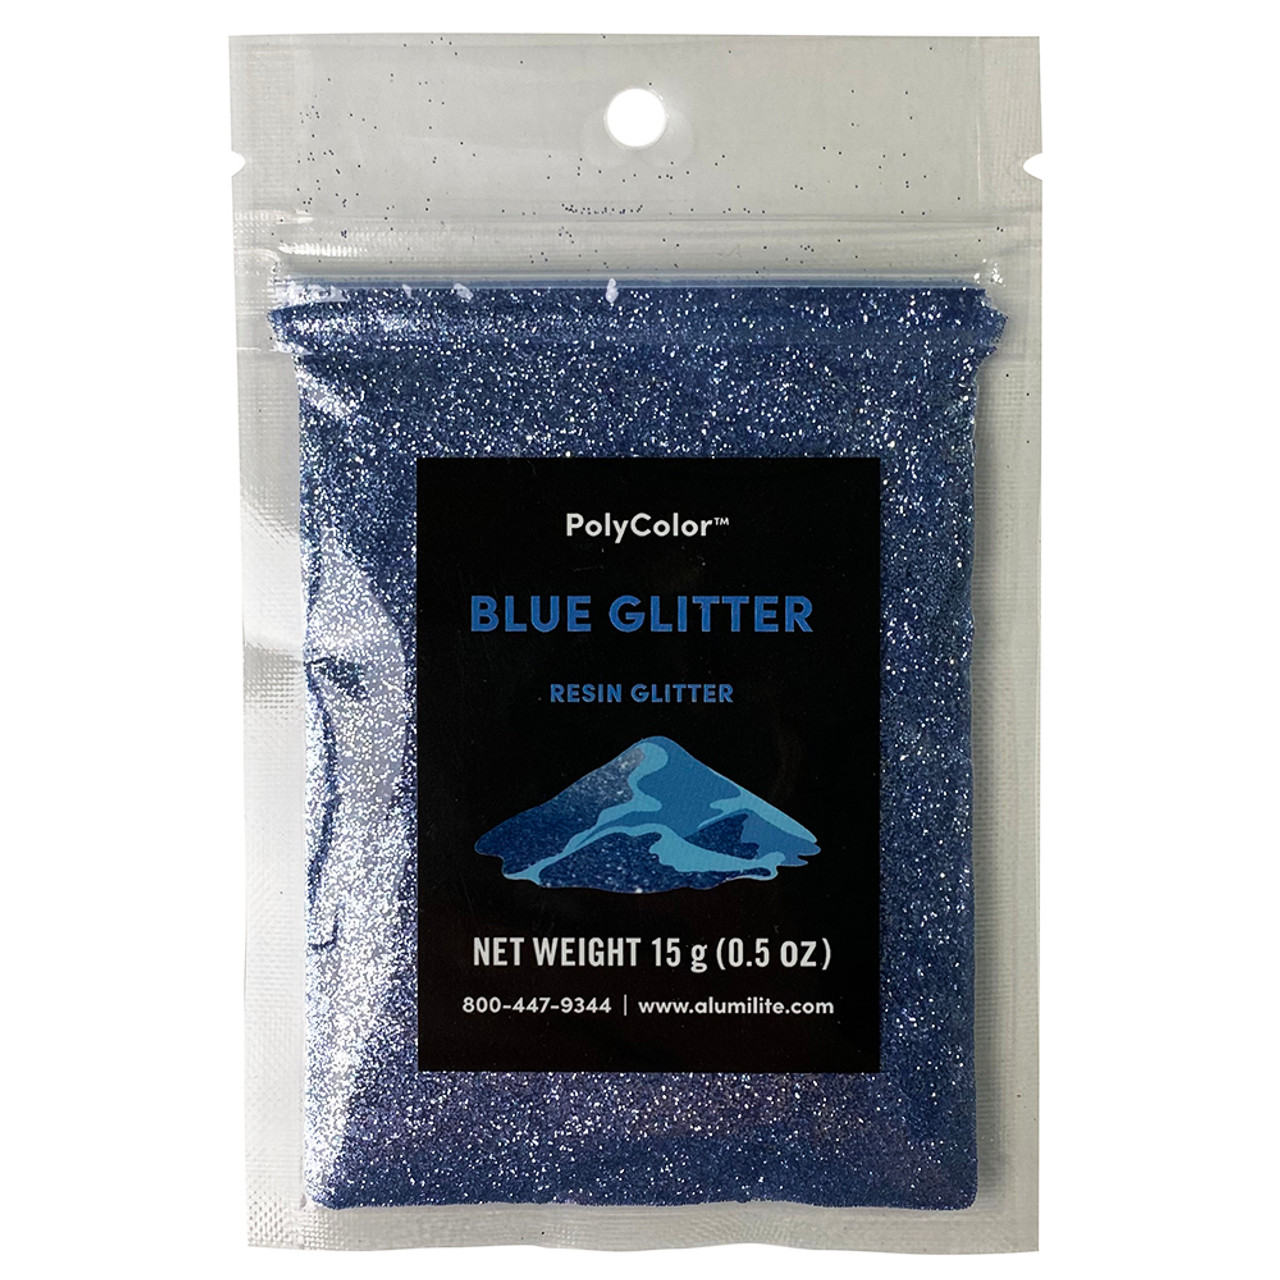 PolyColor Resin Glitter